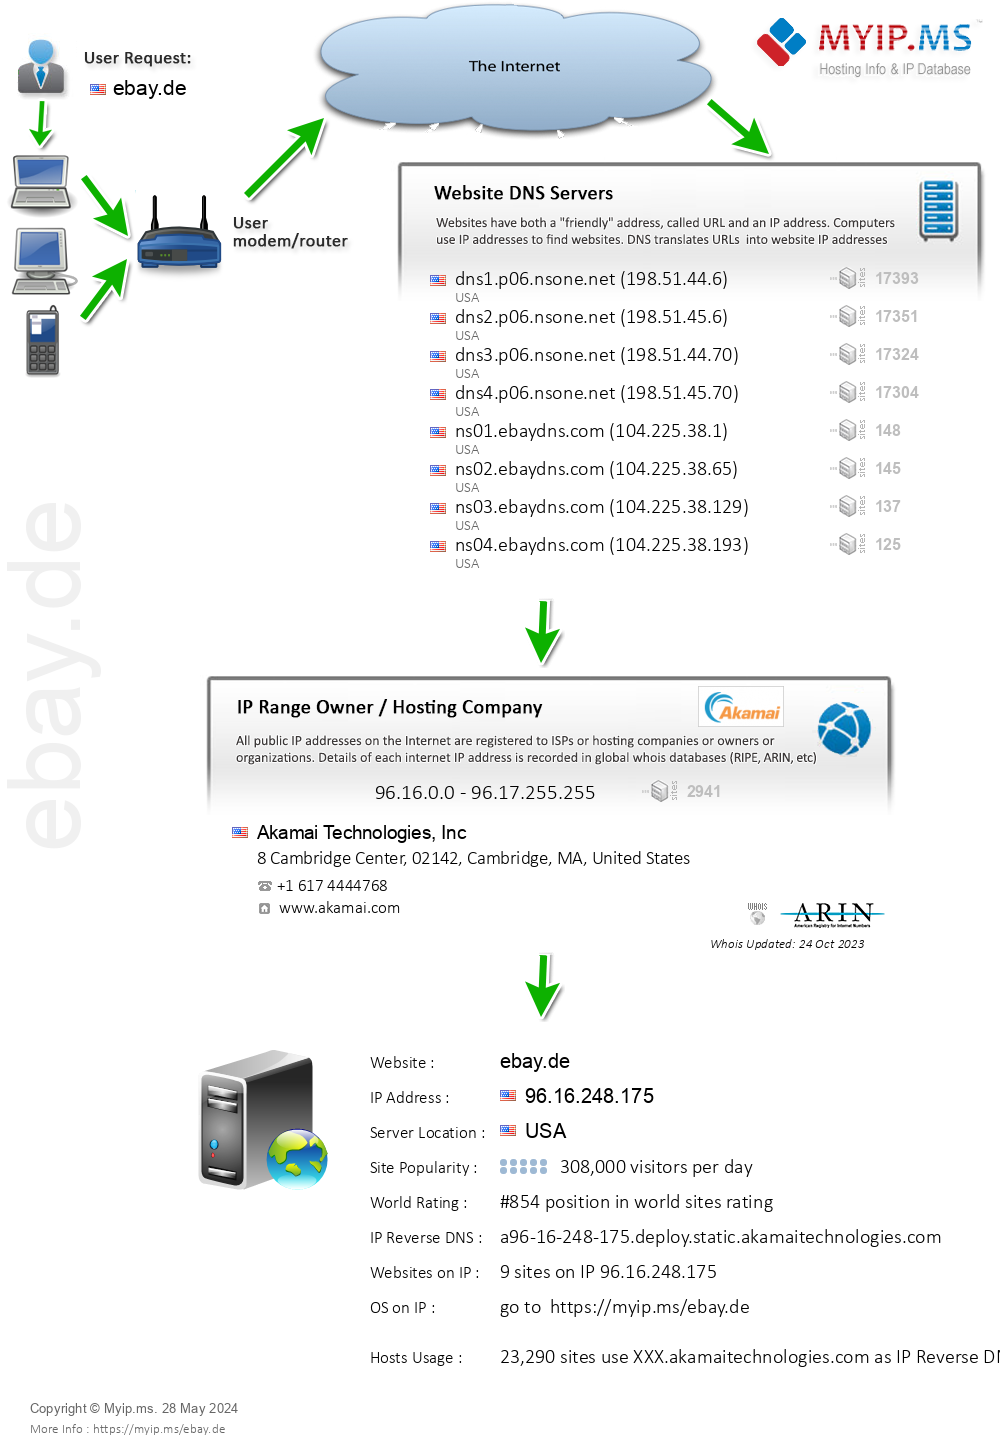 Ebay.de - Website Hosting Visual IP Diagram